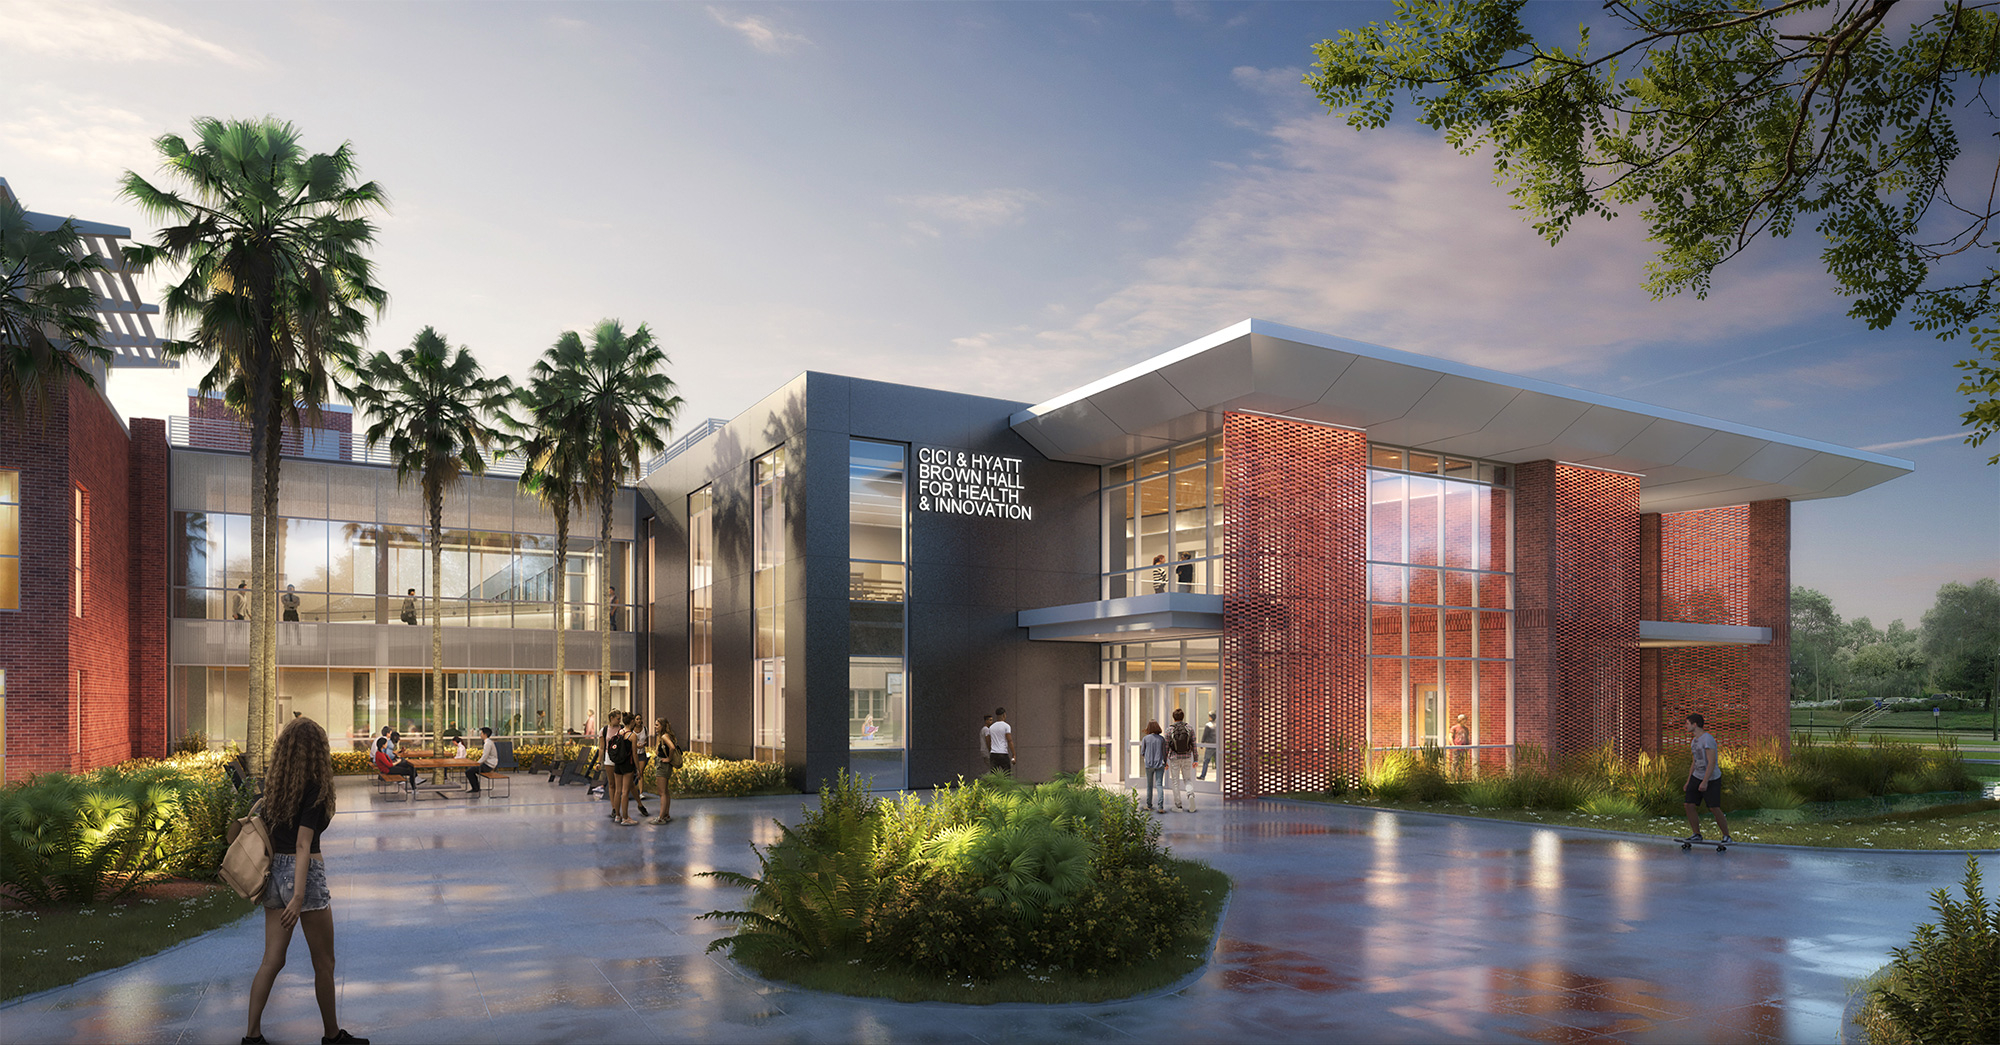 Stetson Set To Build Cici Hyatt Brown Hall For Health Innovation